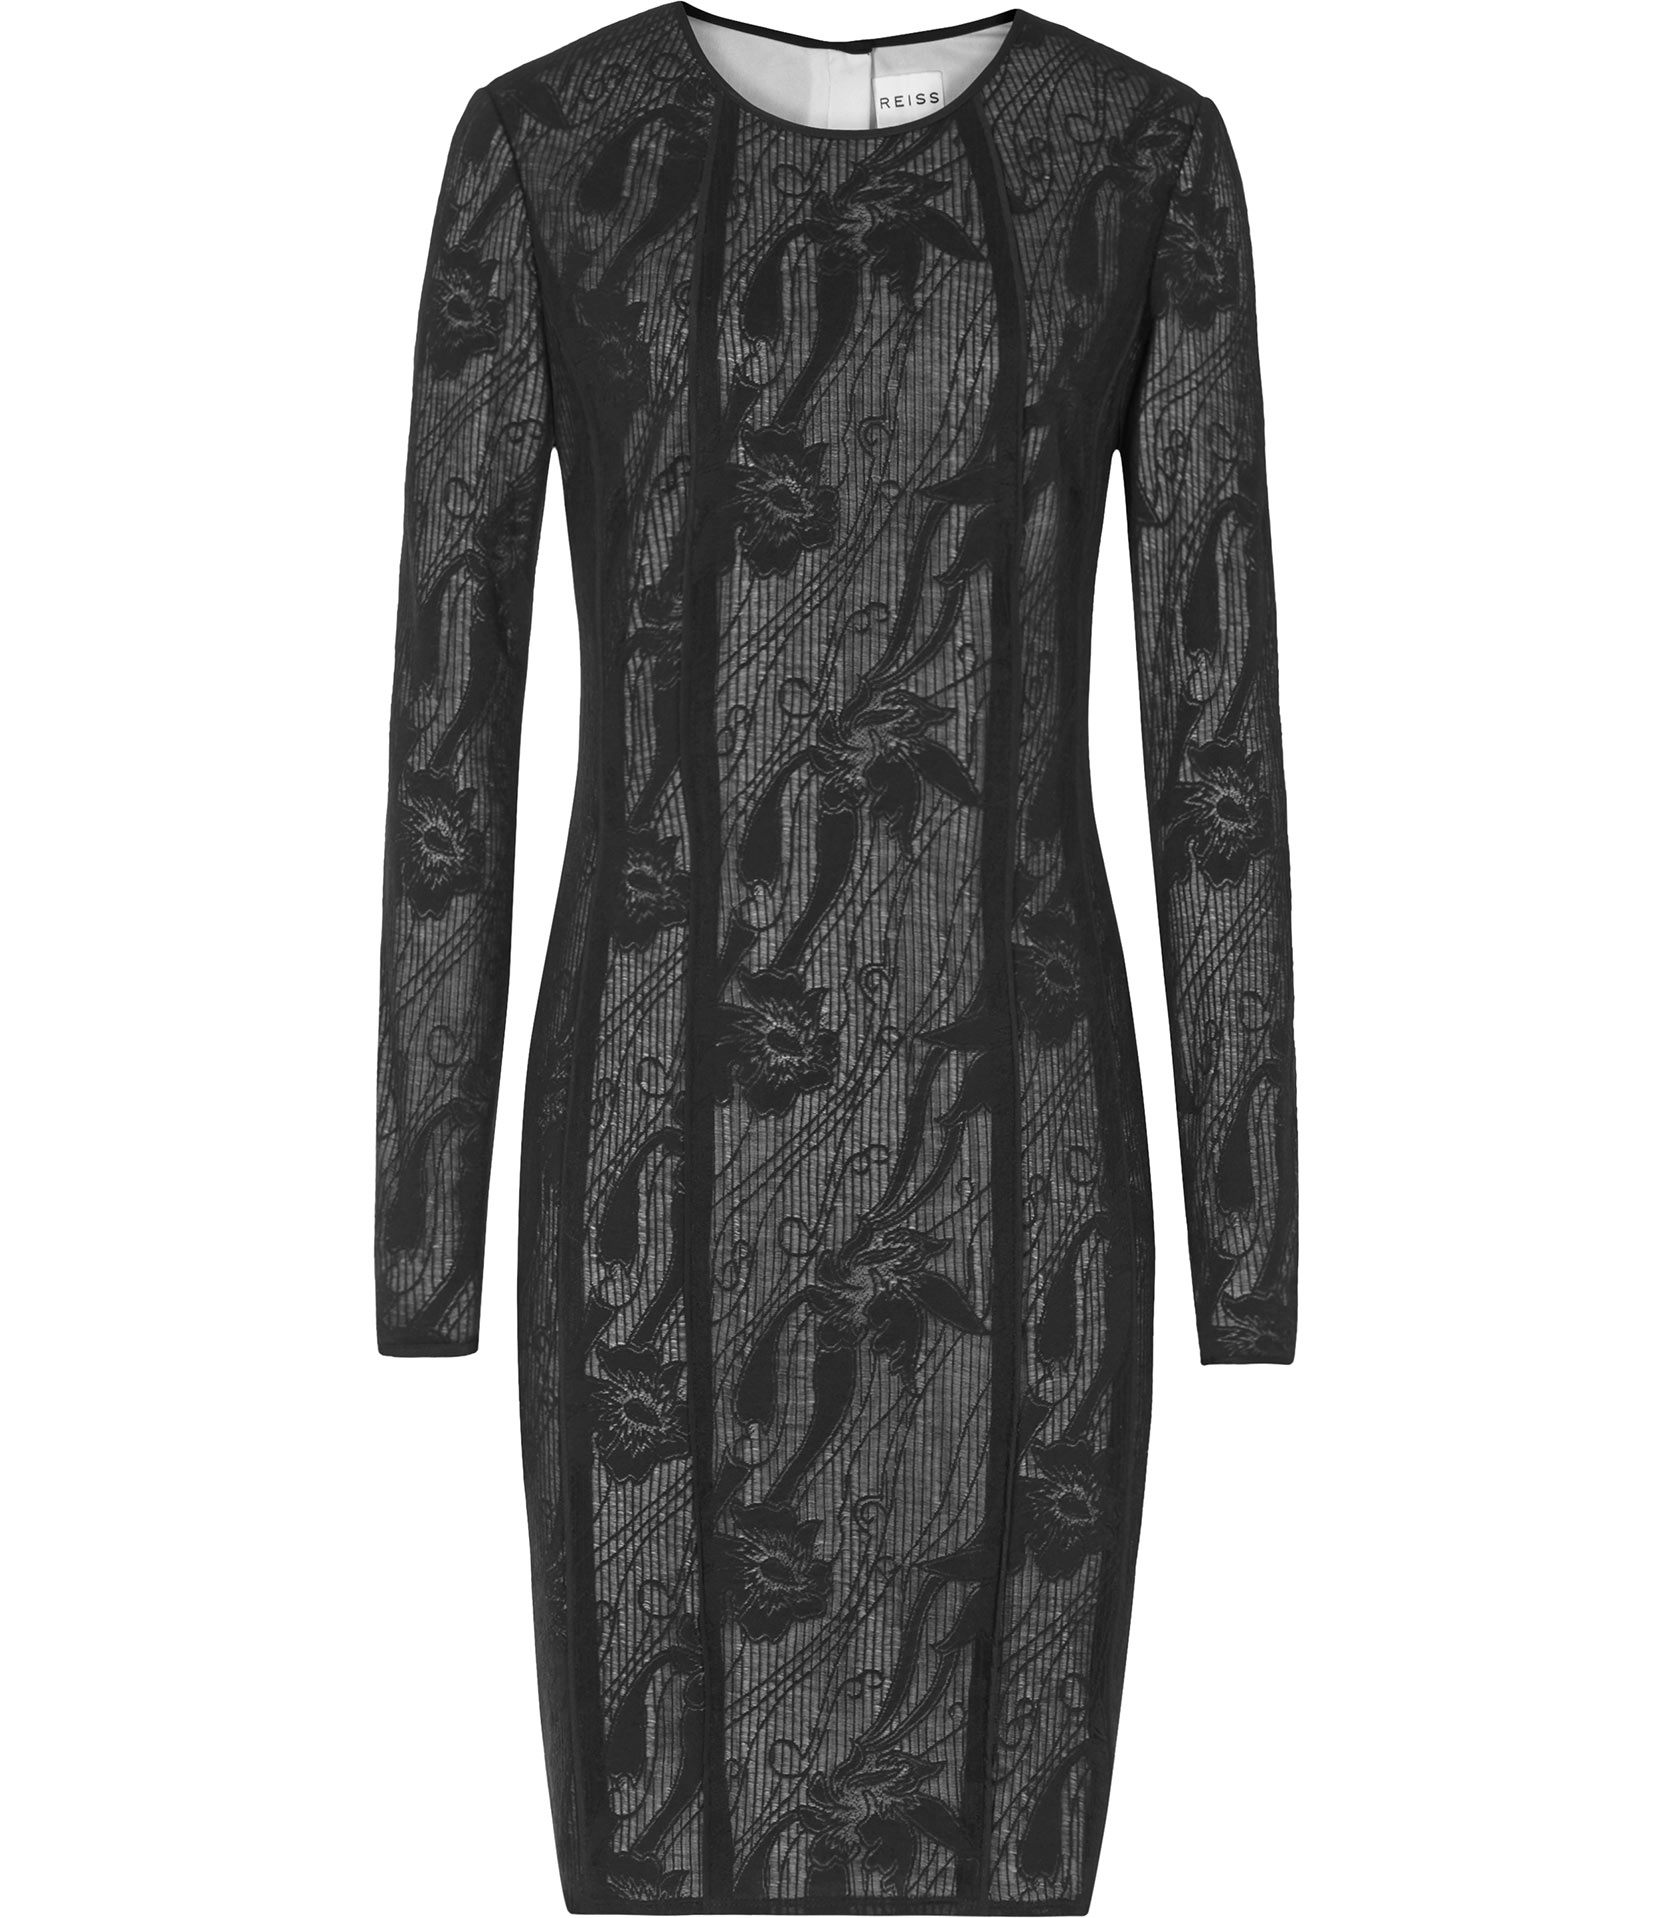 Lyst - Reiss Kitty Lace Long Sleeve Lace Dress in Black